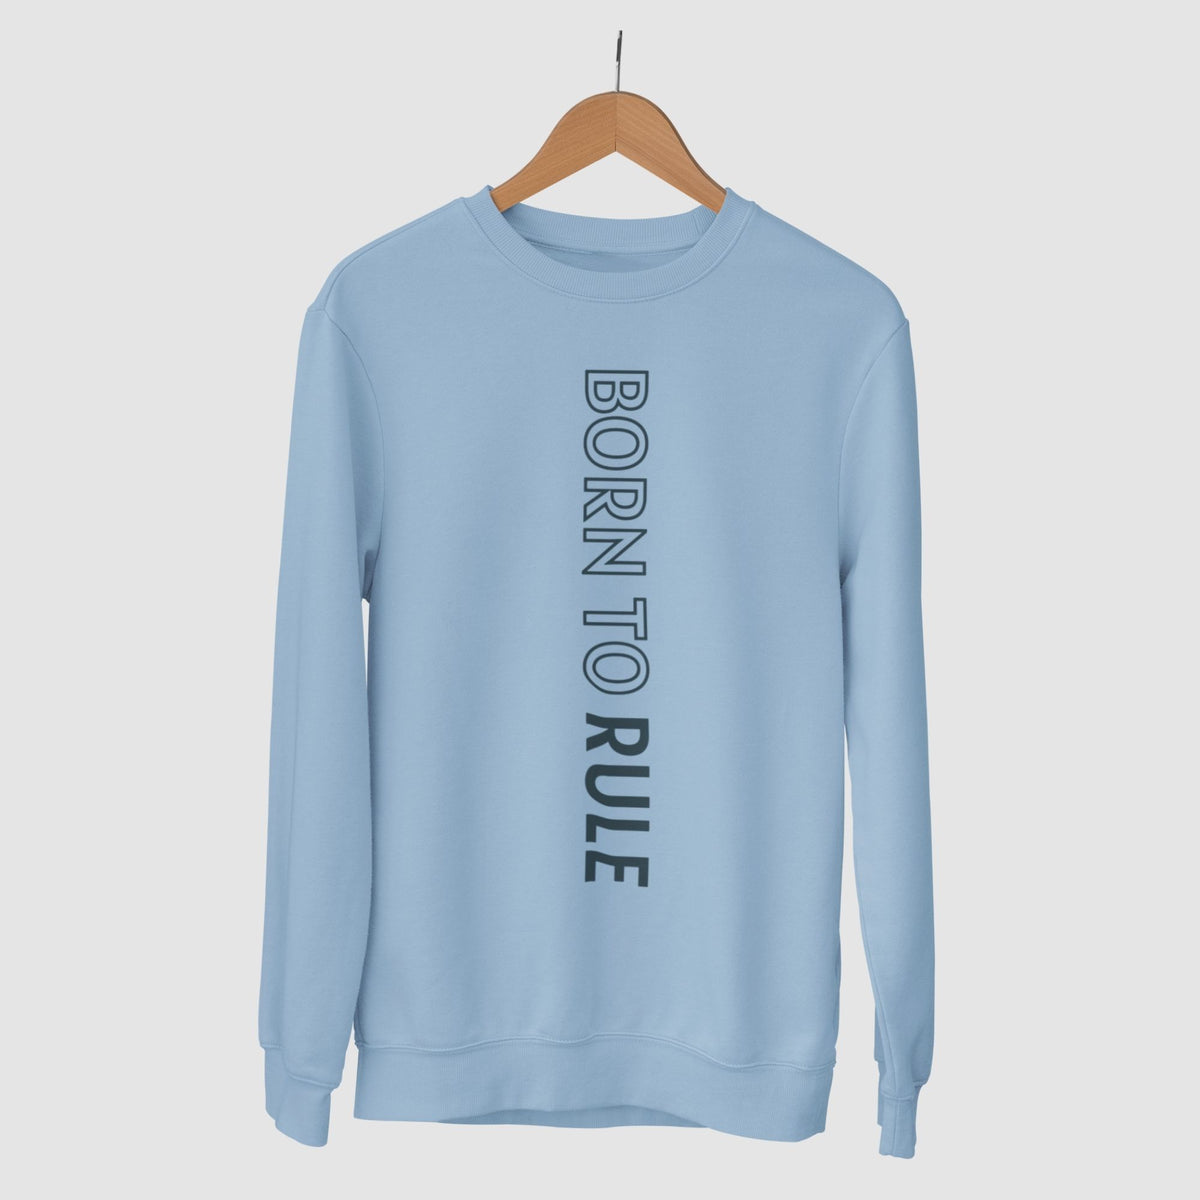 born-to-rule-cotton-printed-unisex-light-blue-sweatshirt-gogirgit-com